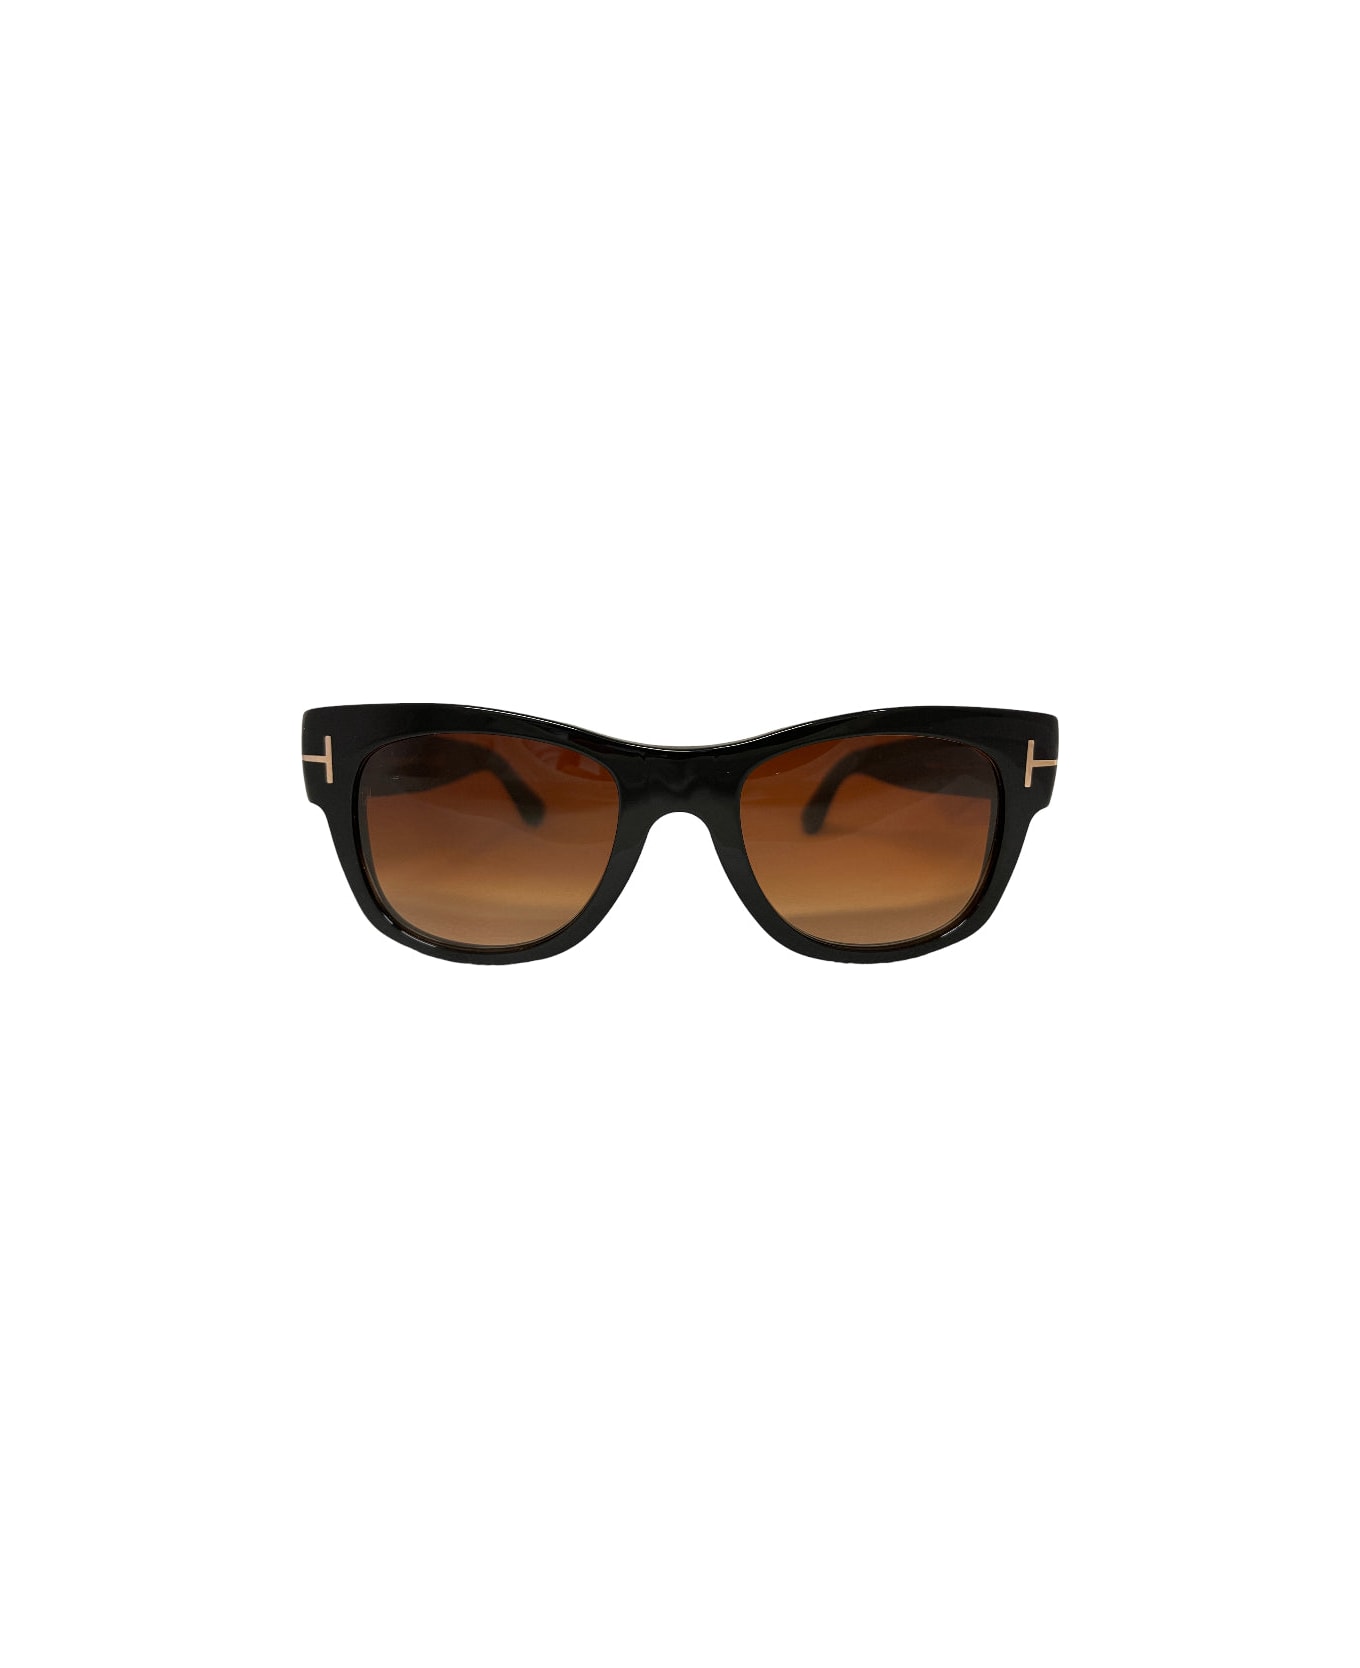 Tom Ford Eyewear Tf 5040/s - Black Sunglasses サングラス